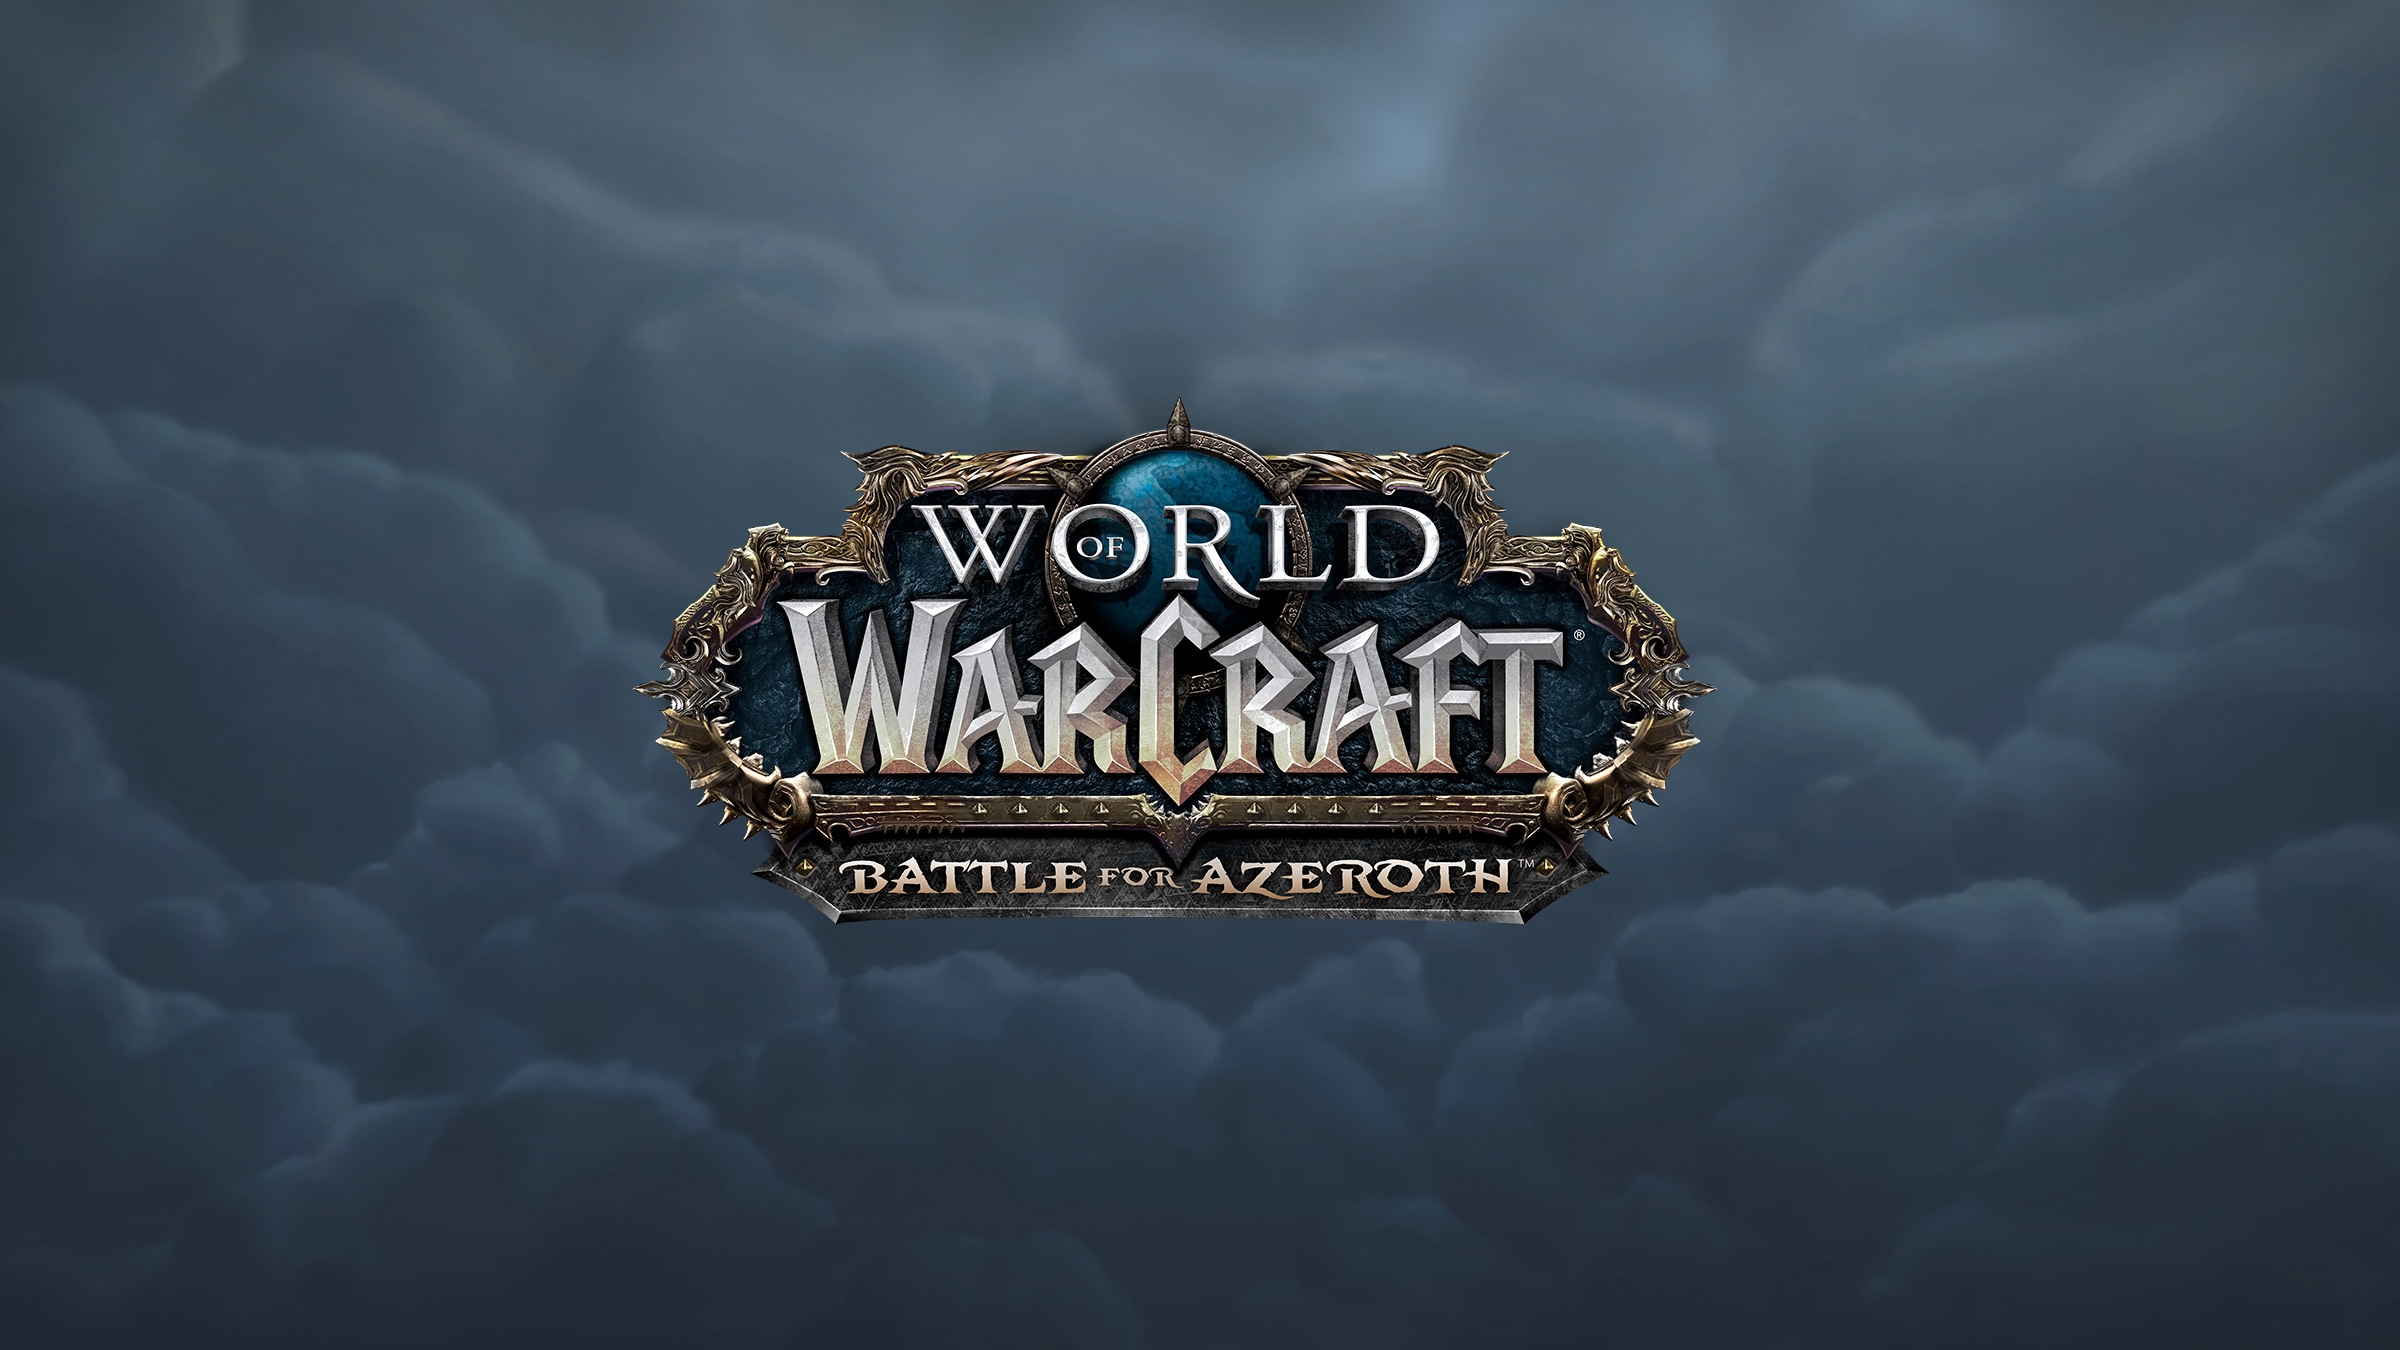 World of Warcraft Battle for Azeroth logo